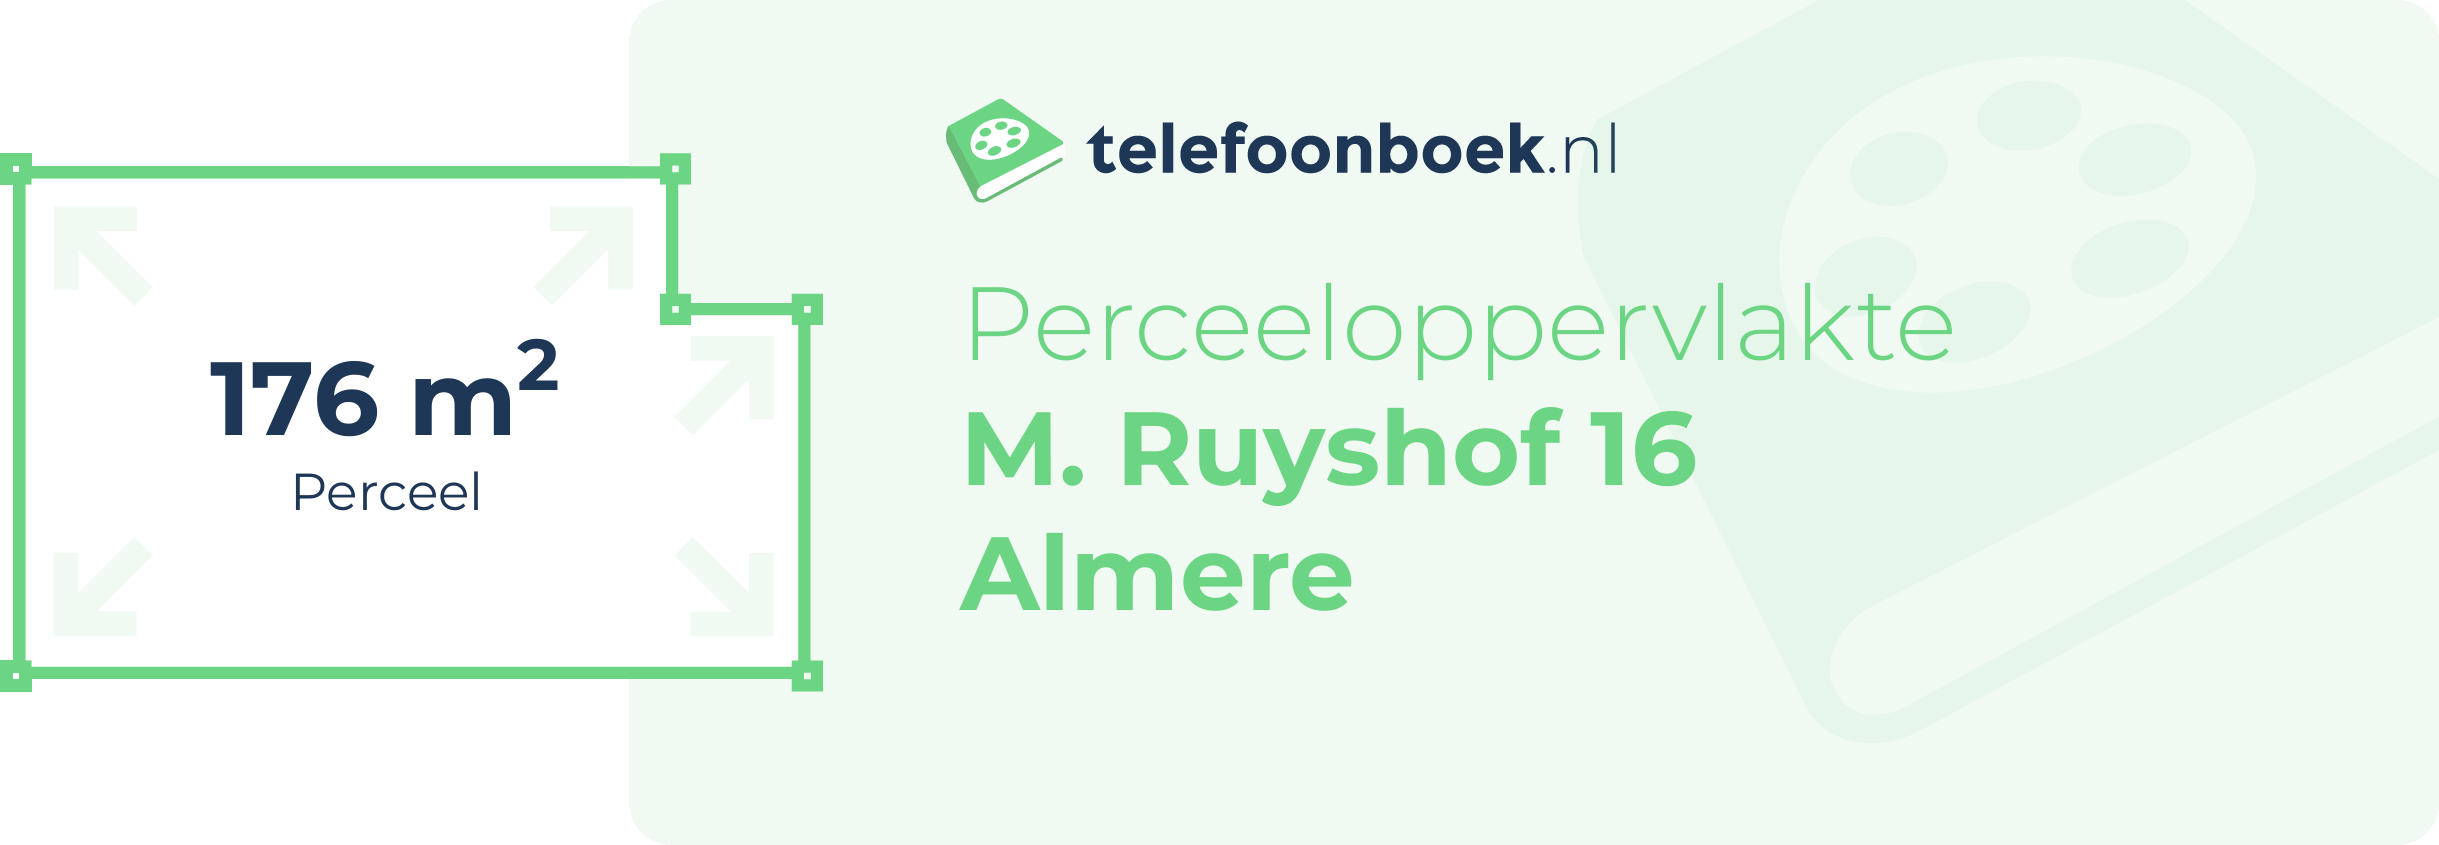 Perceeloppervlakte M. Ruyshof 16 Almere